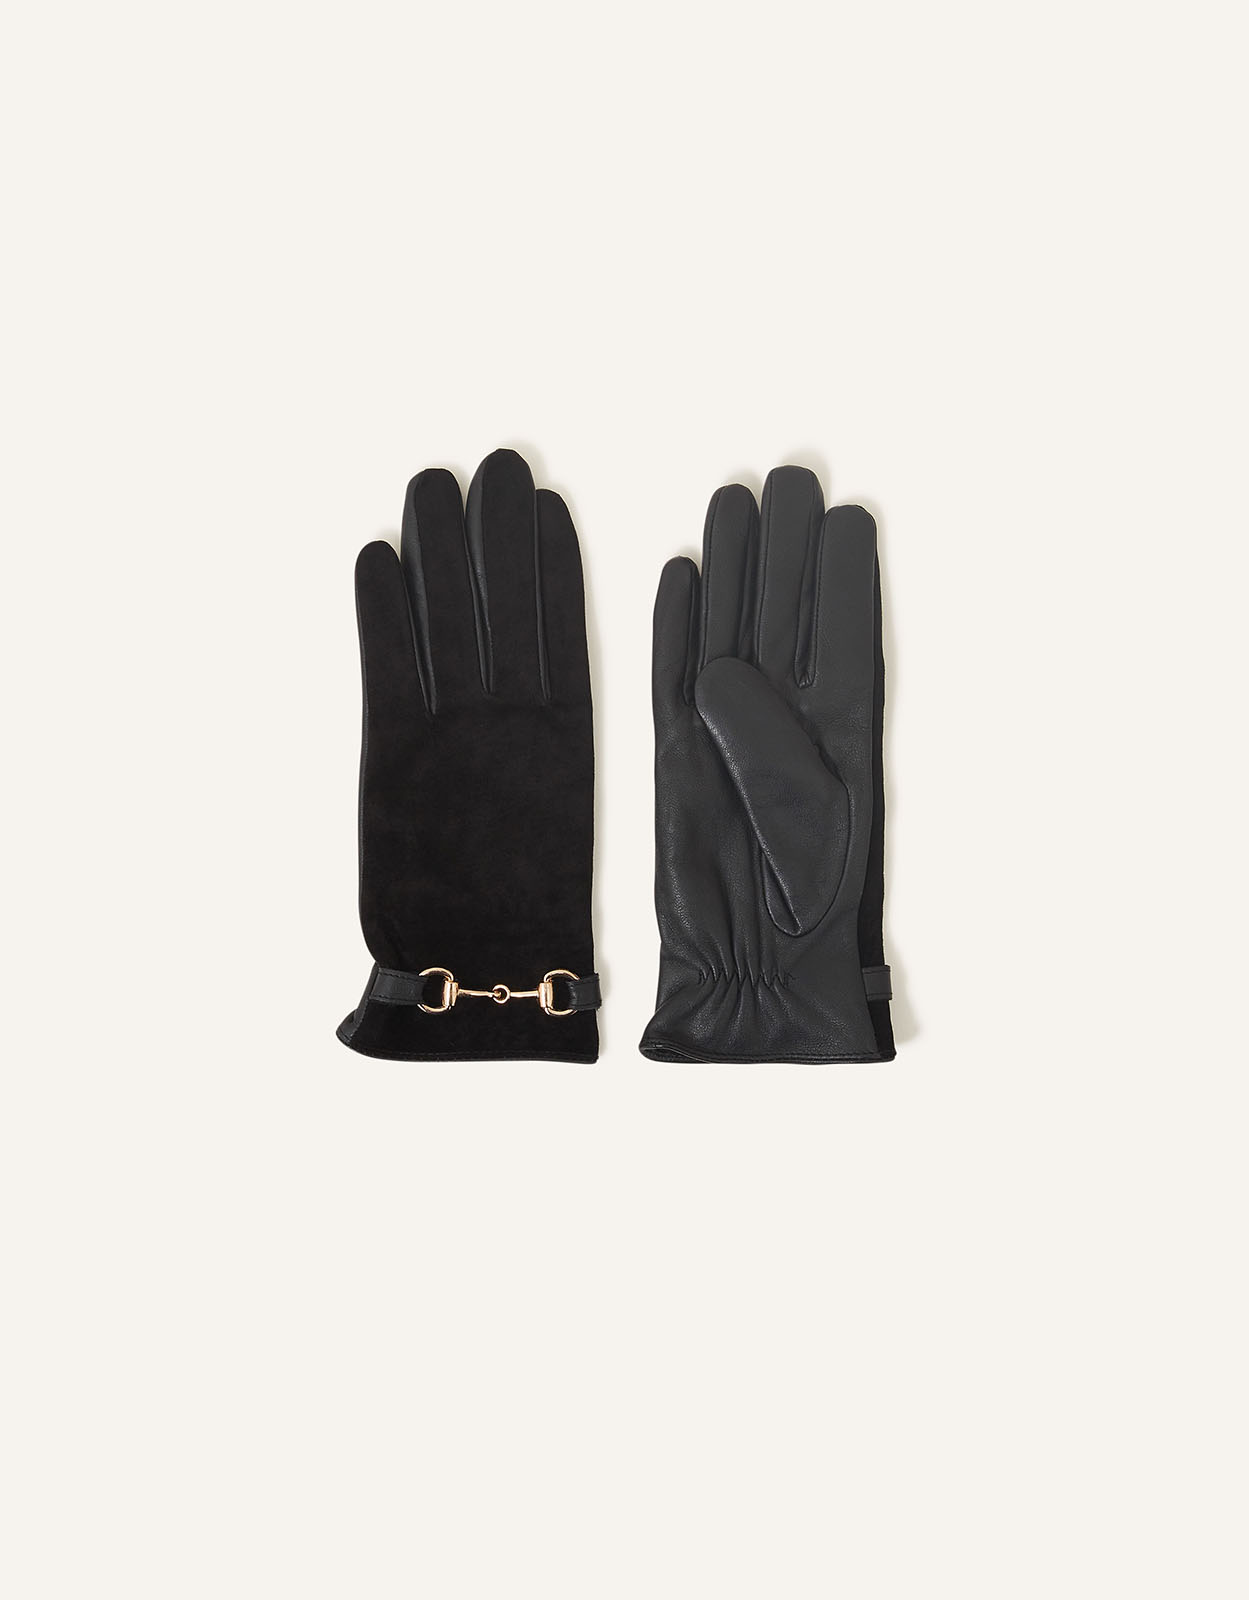 Accessorize Women's Leather Horsebit Gloves Black, Size: Medum/ Large